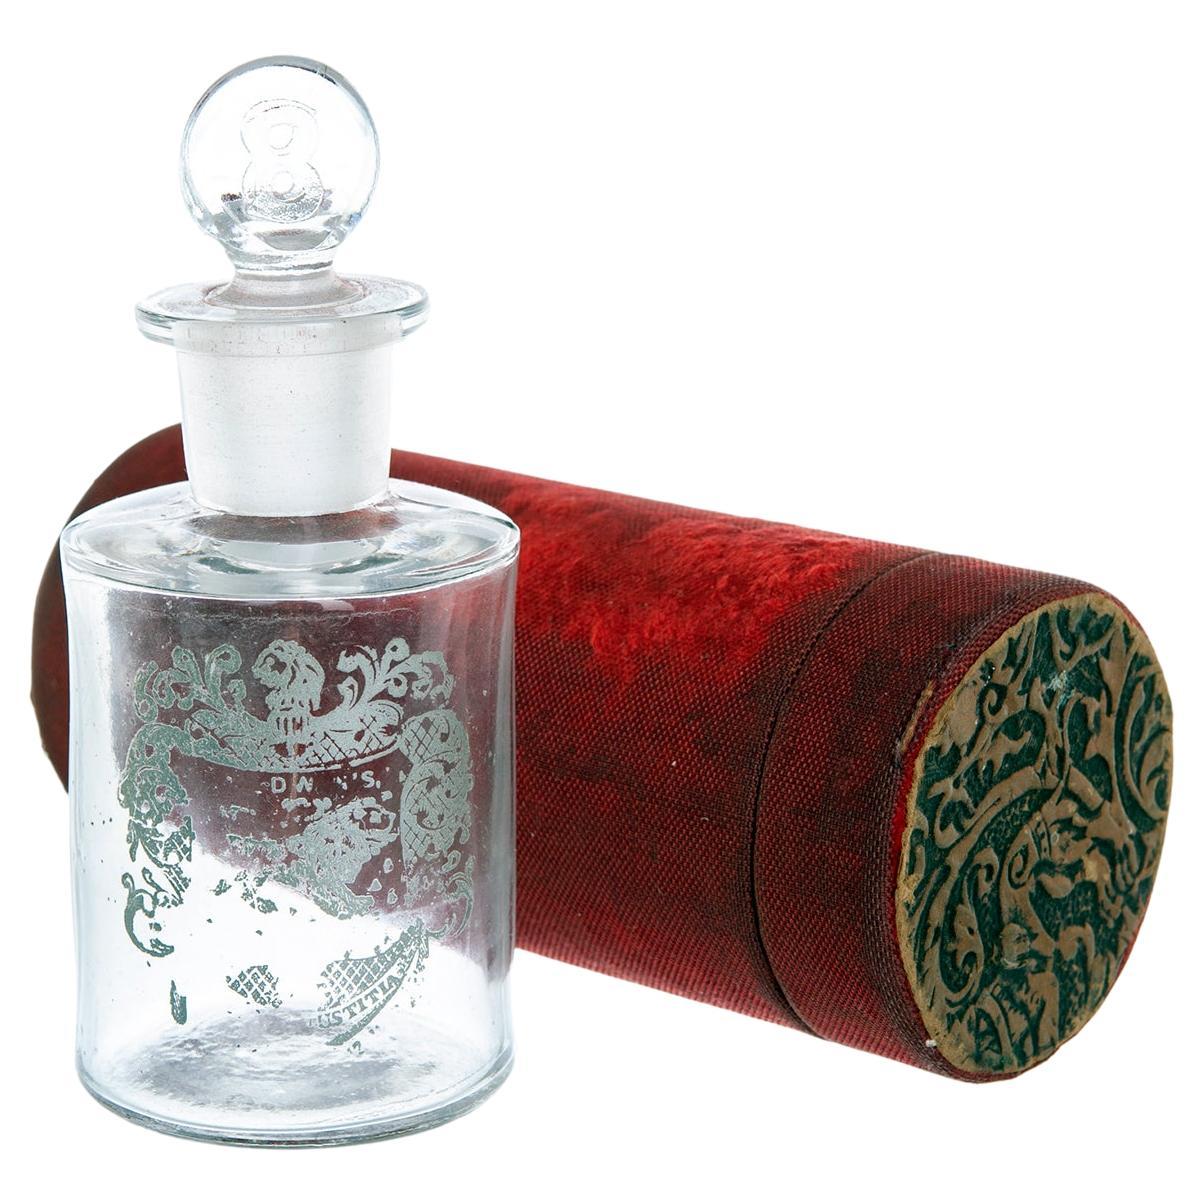 Sold at Auction: Antique German Perfume Bottle W/ Travel Case